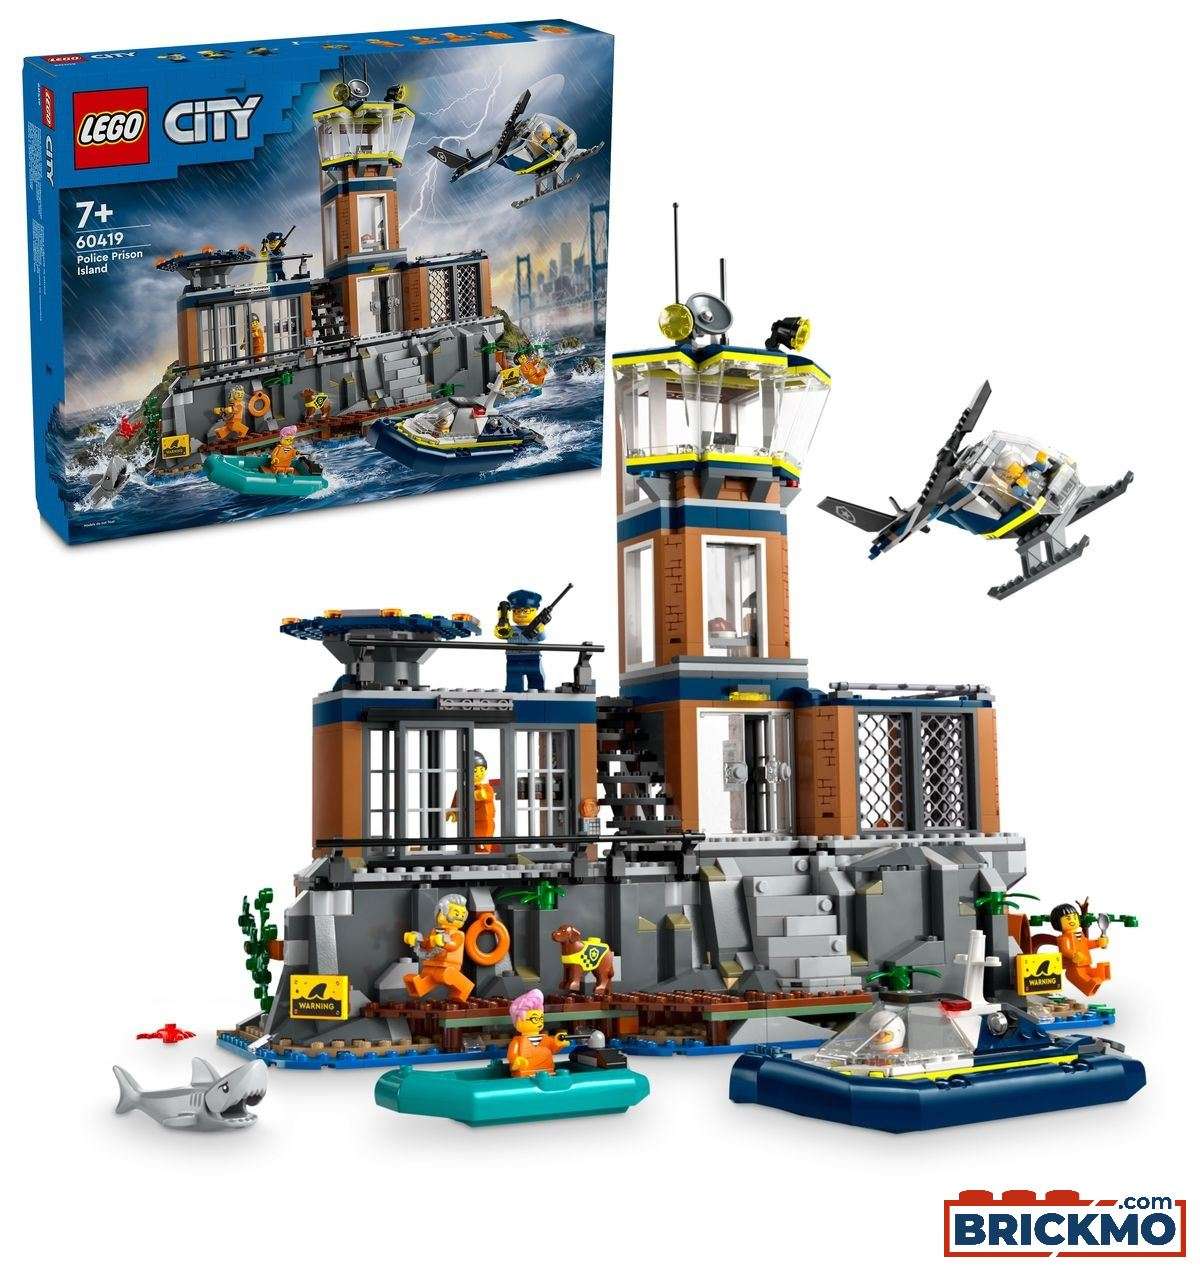 LEGO City 60419 Police Prison Island 60419